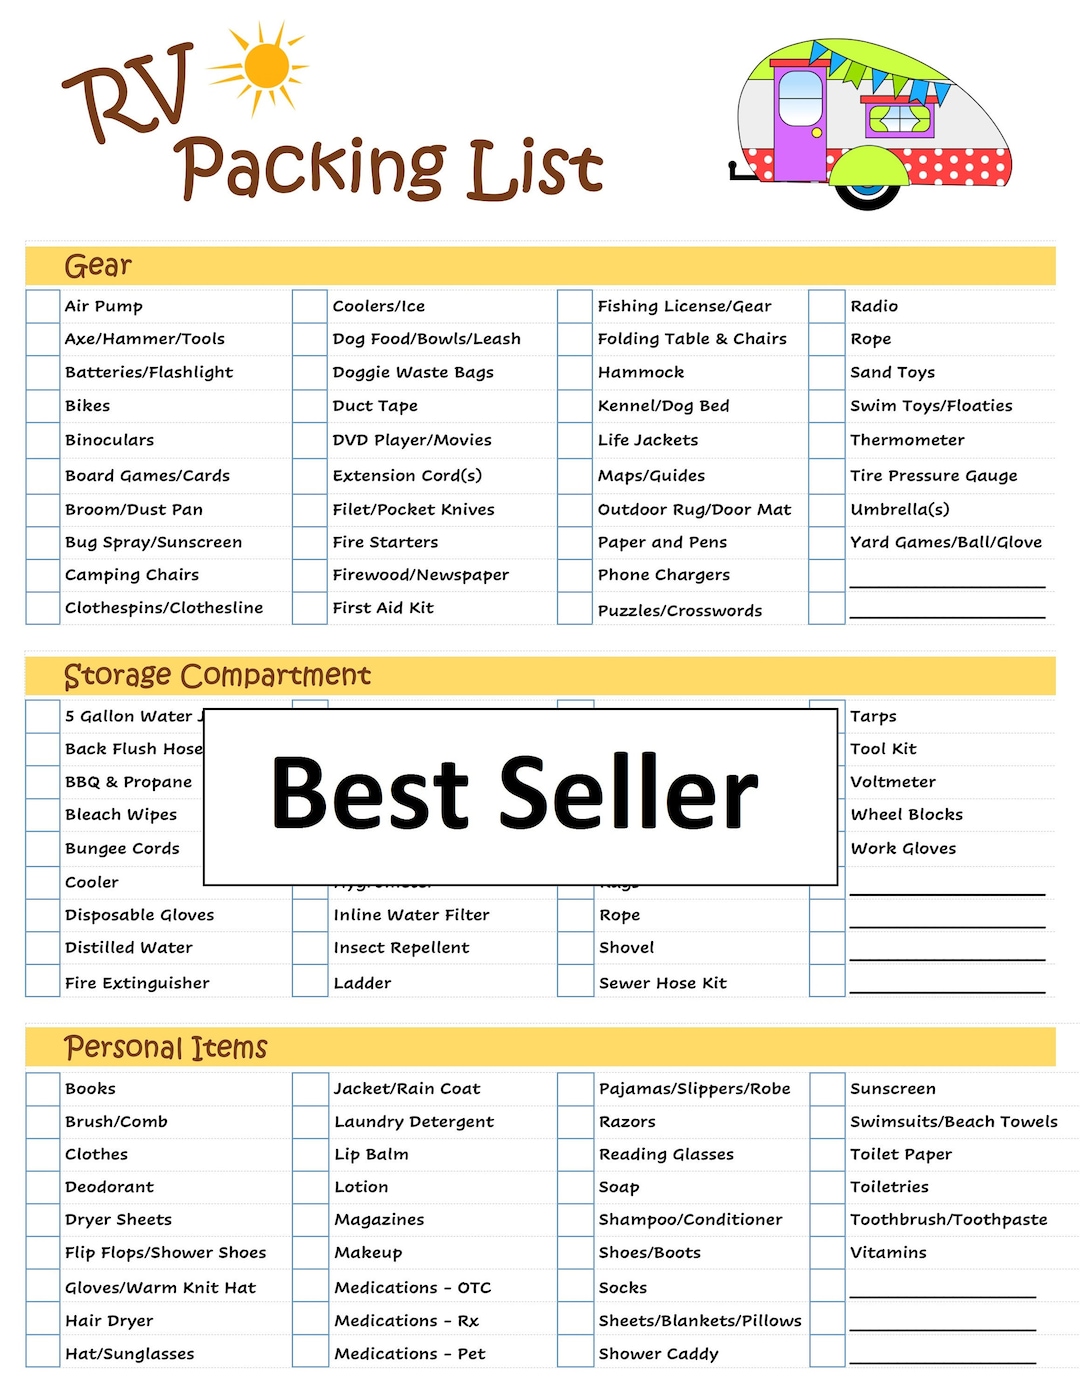 ultimate-rv-packing-list-checklist-digital-download-printable-never